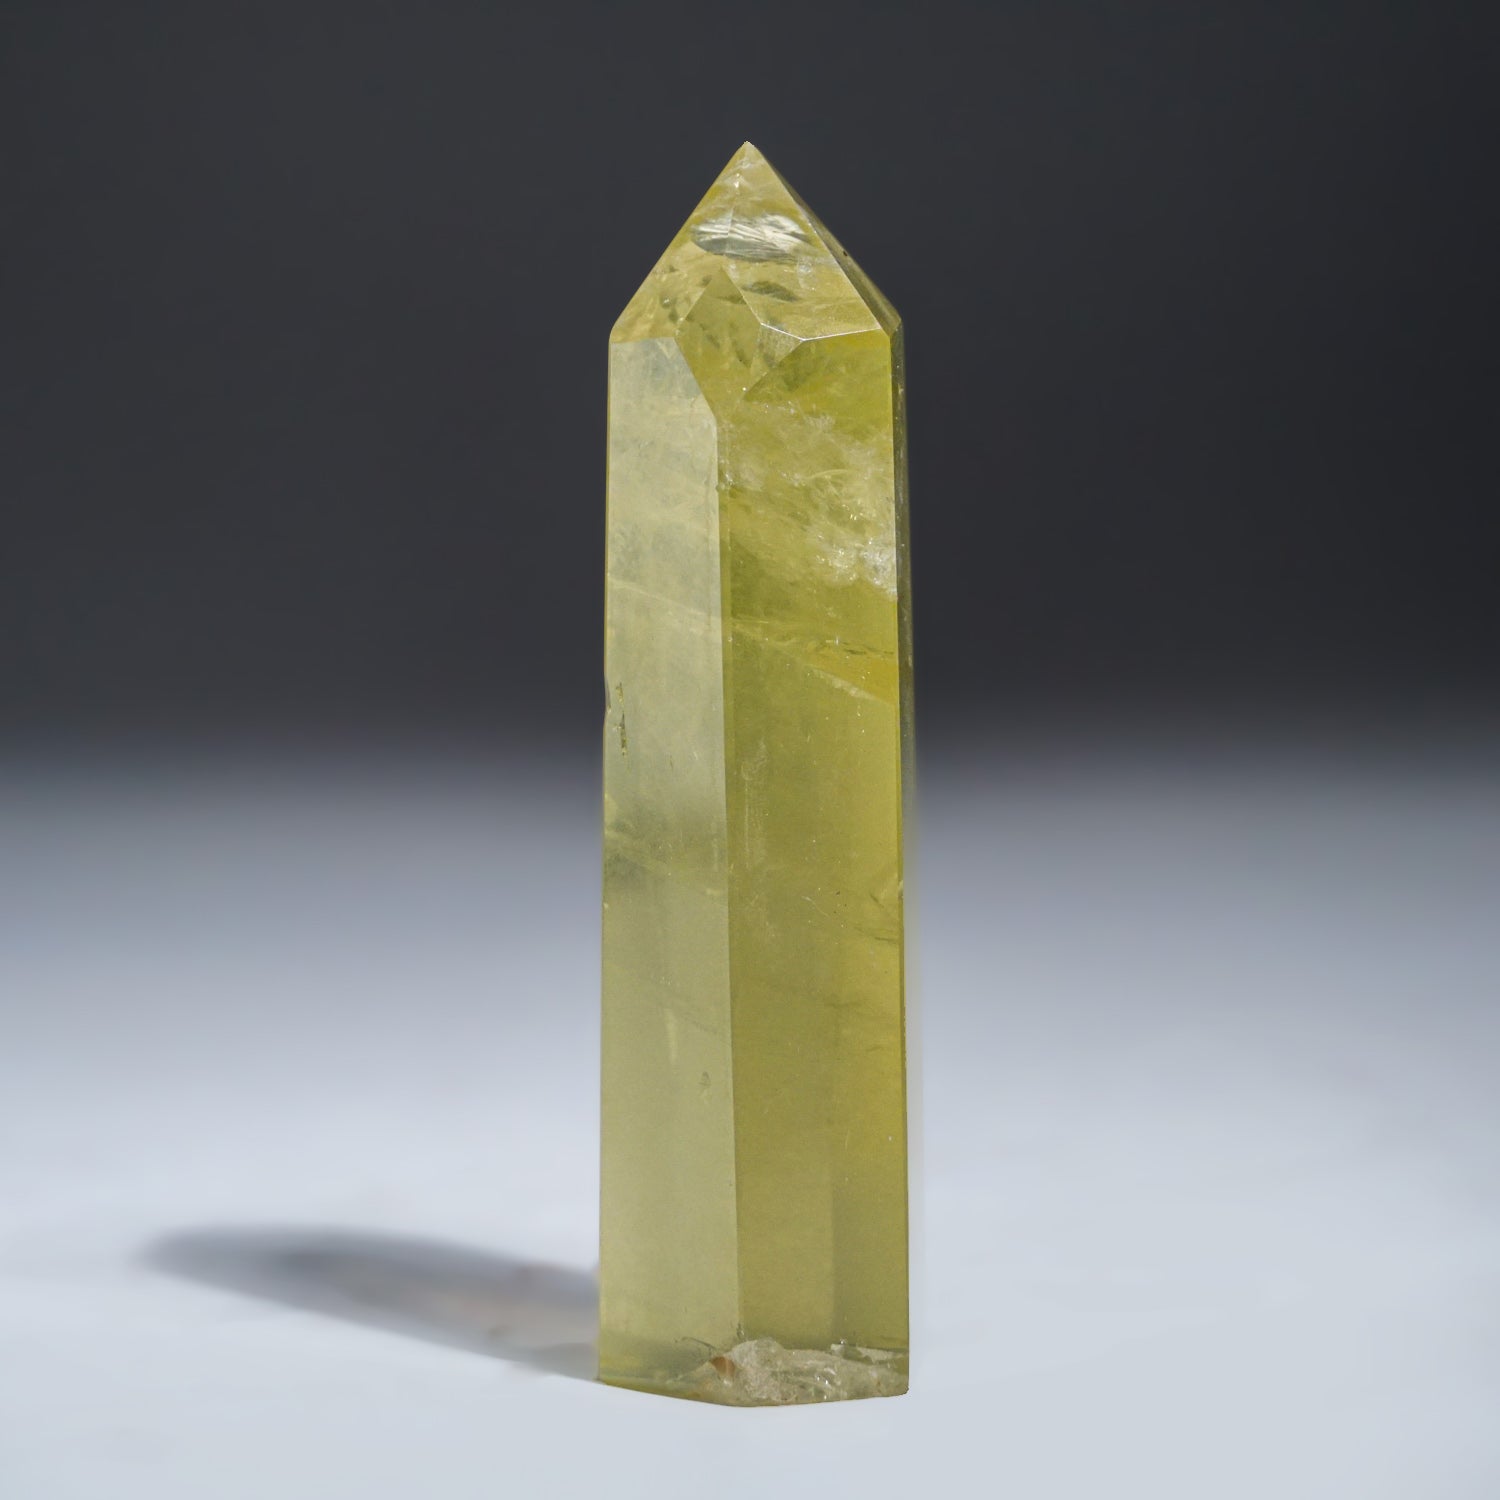 Polished Lemon Quartz Crystal Point from Brazil (121.6 grams)